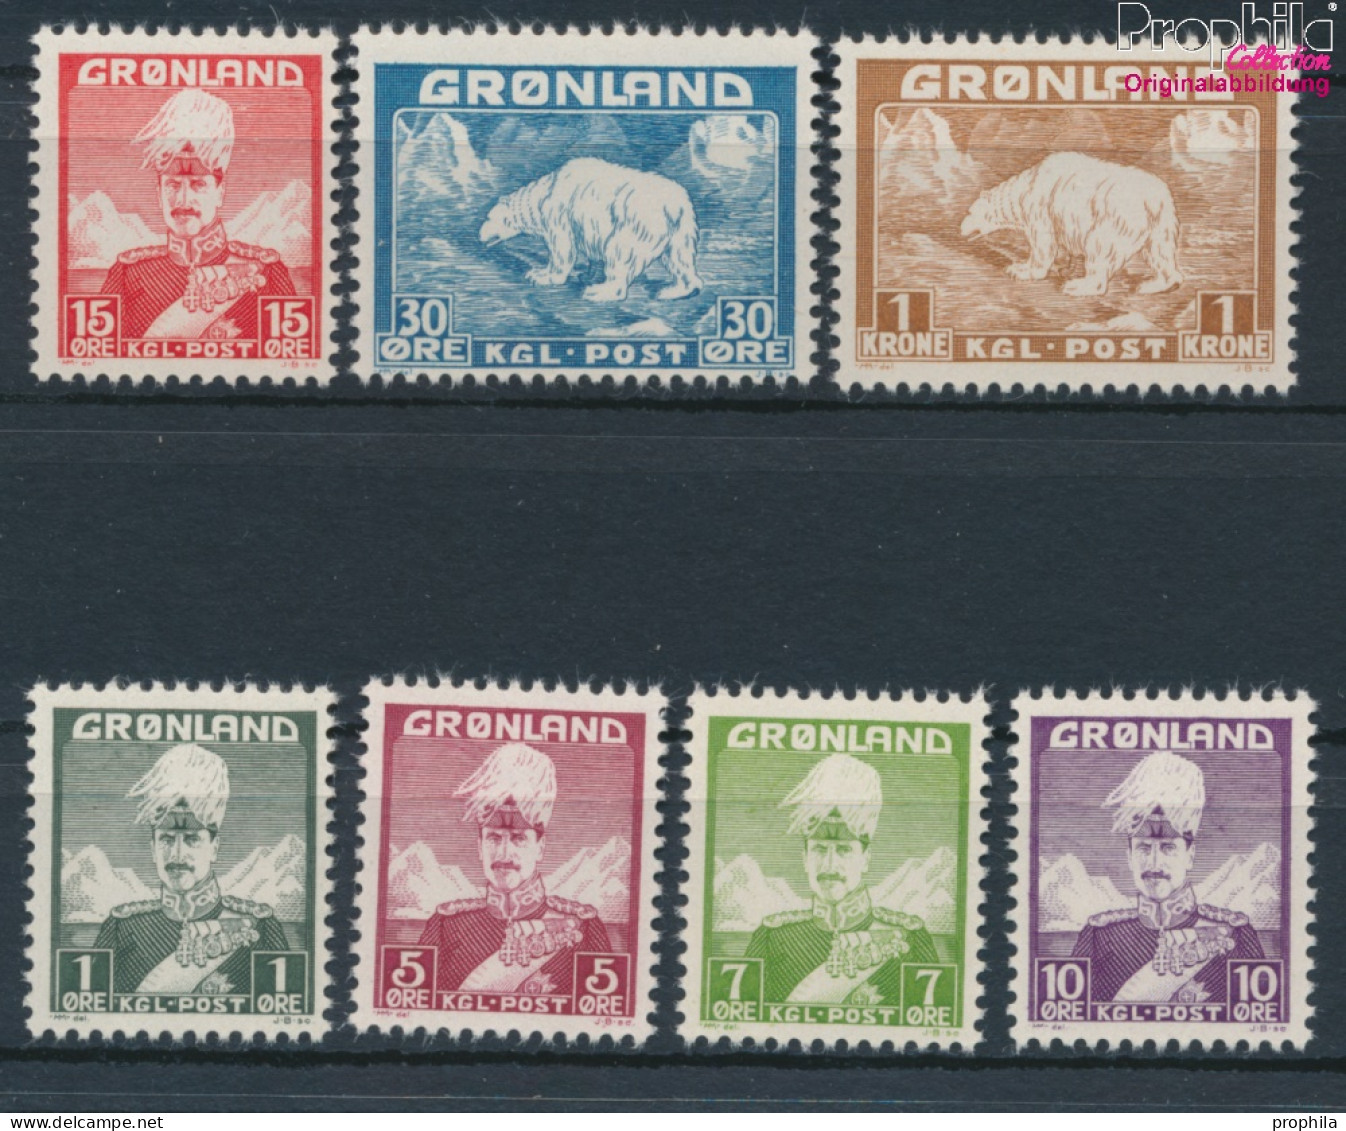 Dänemark - Grönland Postfrisch Christian X. 1938 König Christian X.  (10174221 - Gebruikt